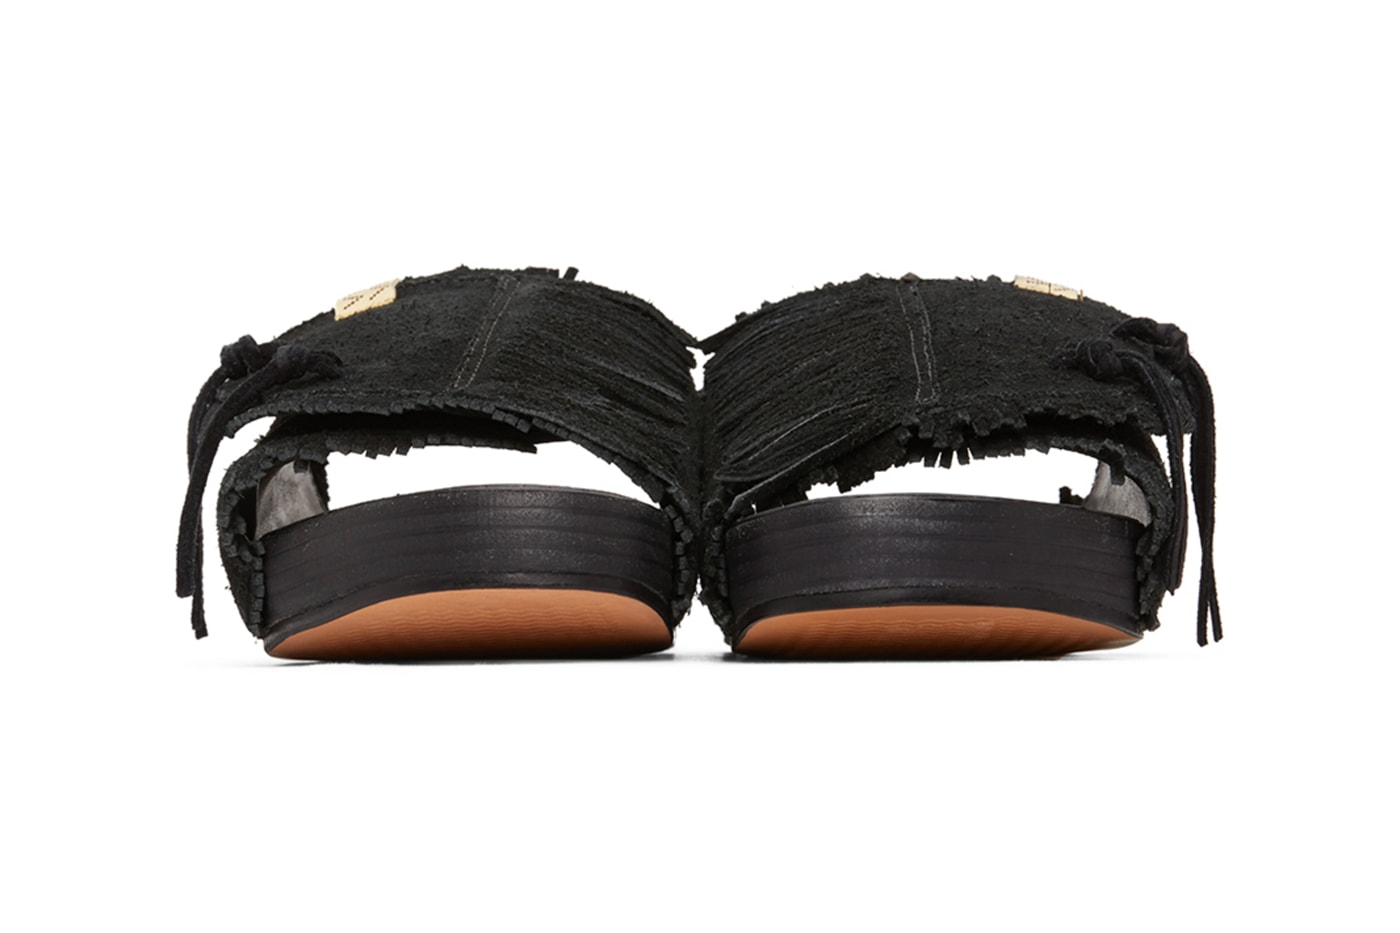 visvim Christo Shaman Folk Sandals in Black FIL ICT Hiroki Nakamura Sandalas Elk Leather Folk Americana Japanese 